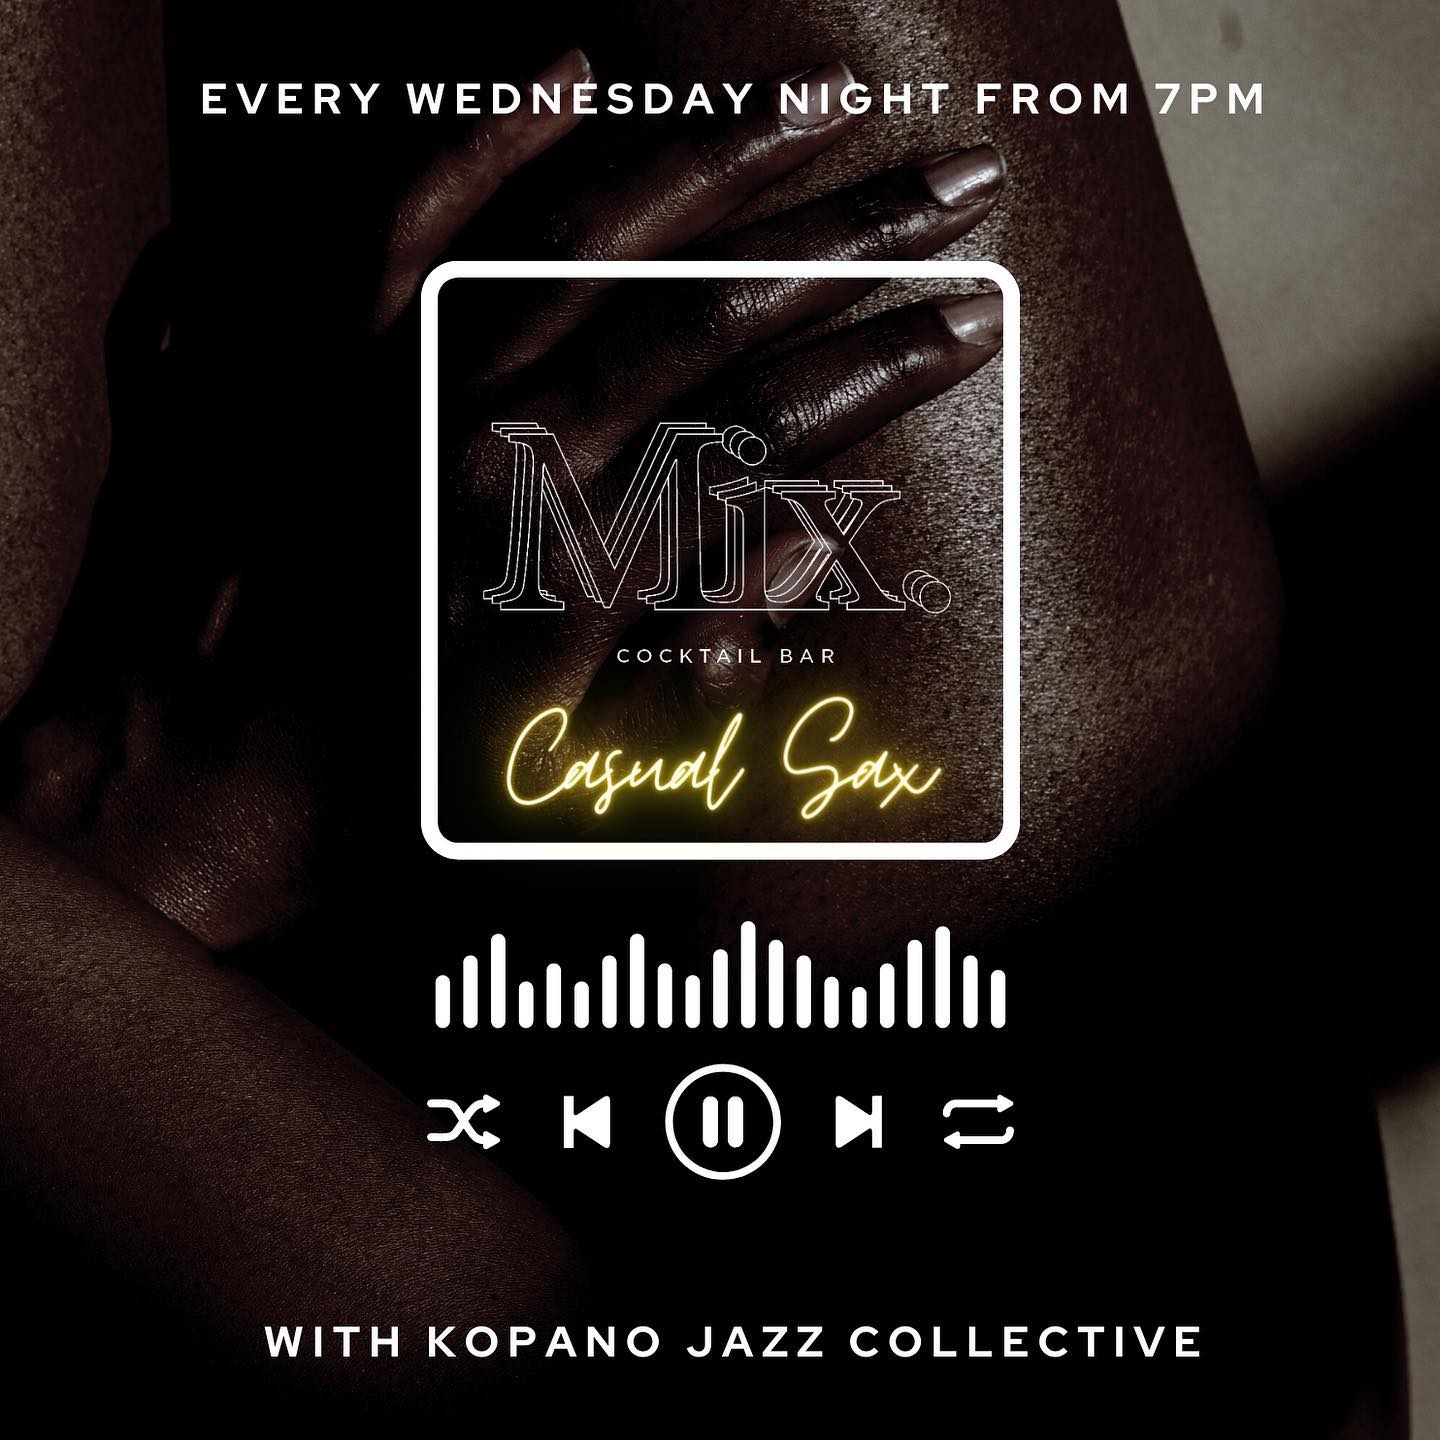 Wednesday night jazz